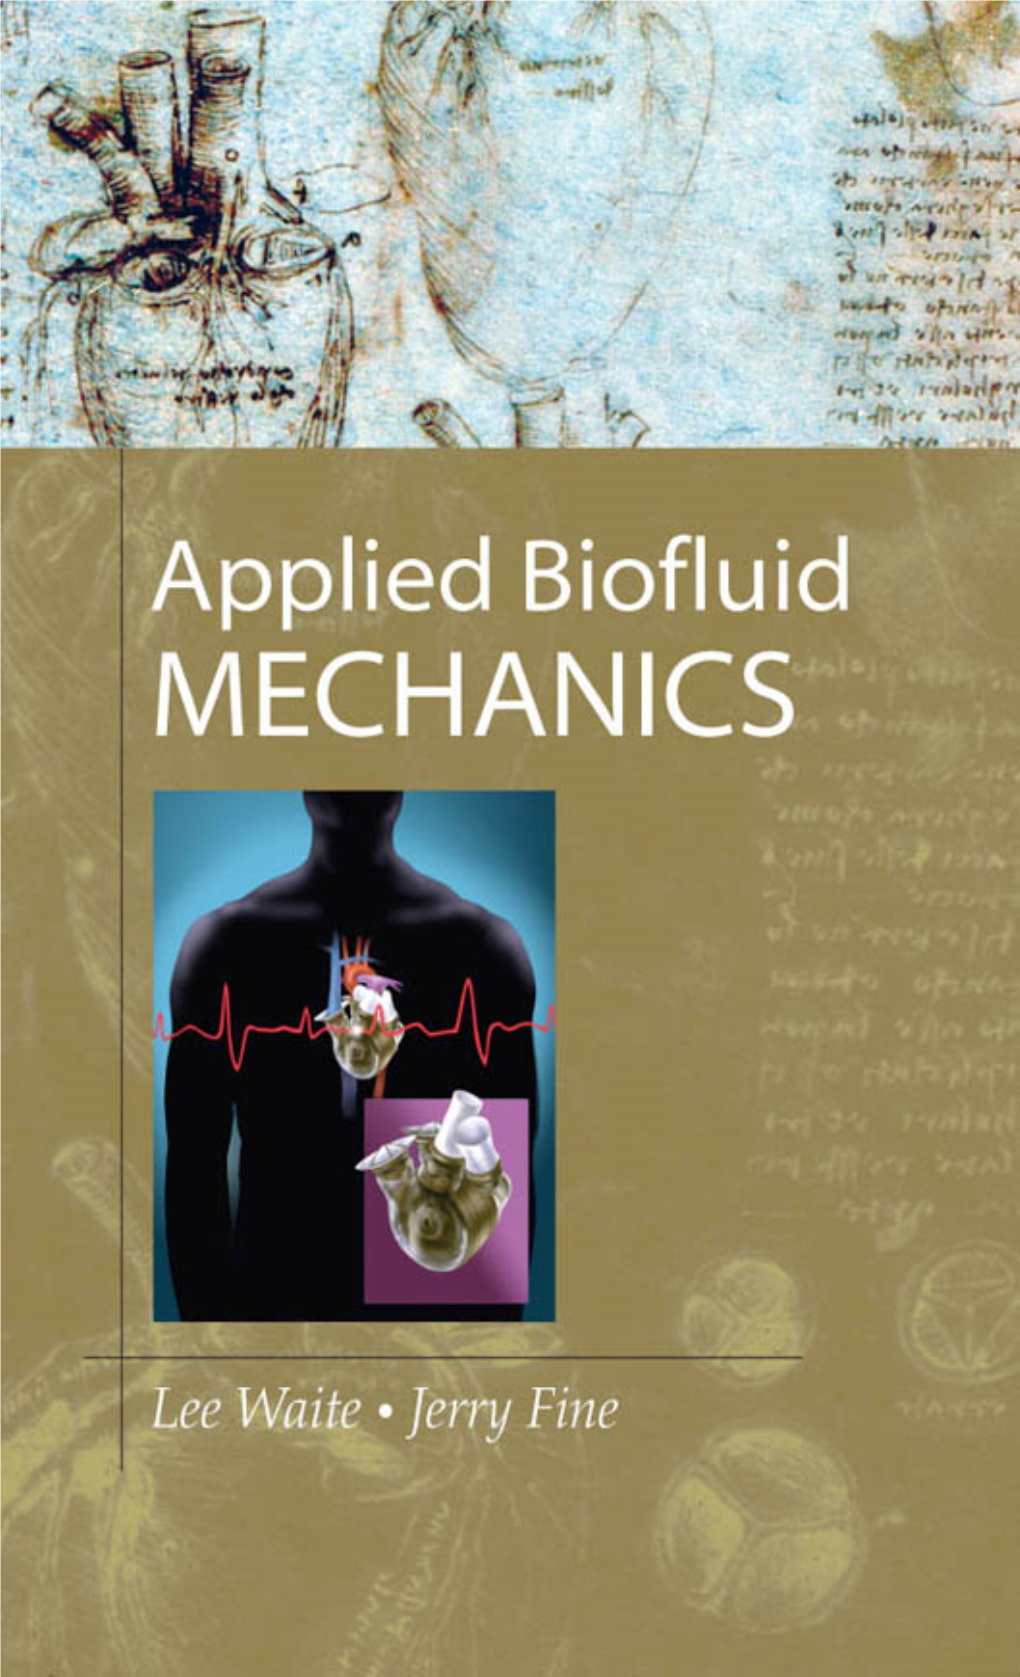 Applied Biofluid Mechanics.Pdf